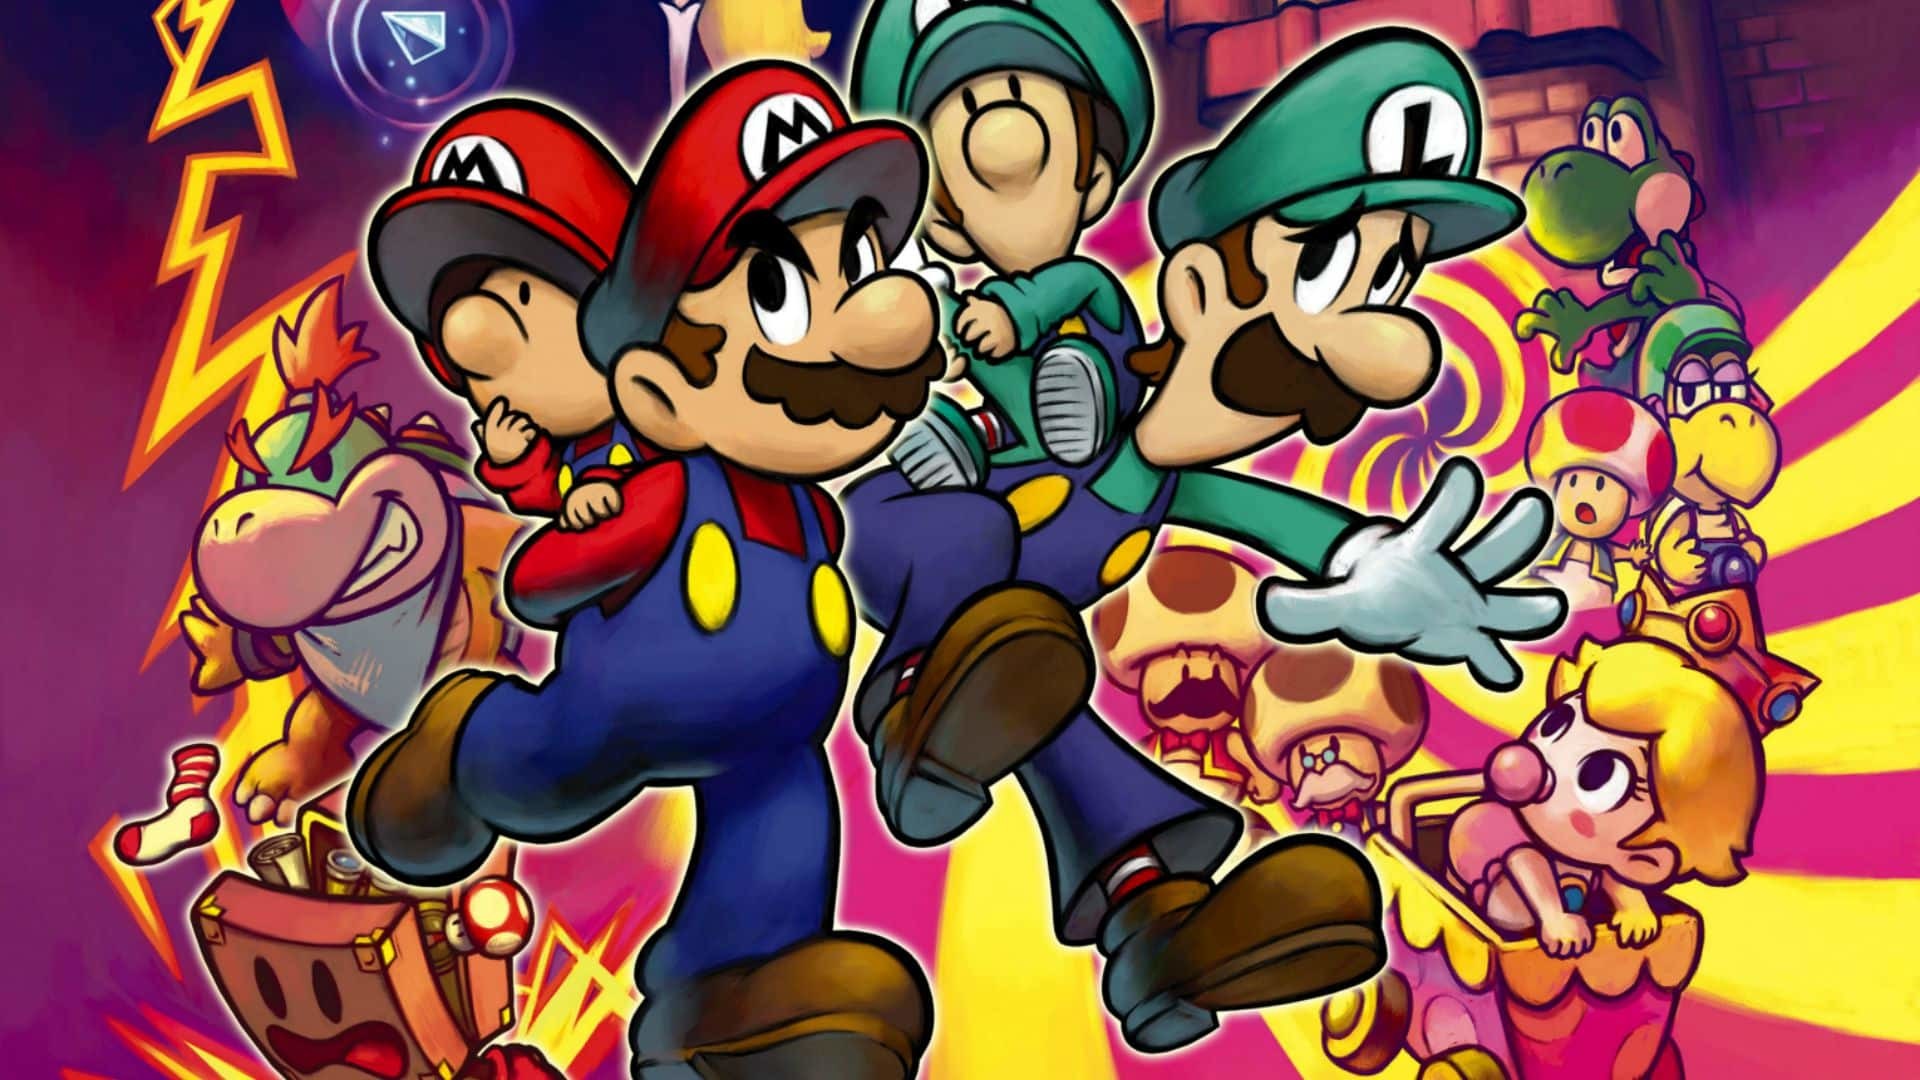 Mario And Luigi Wallpaper.